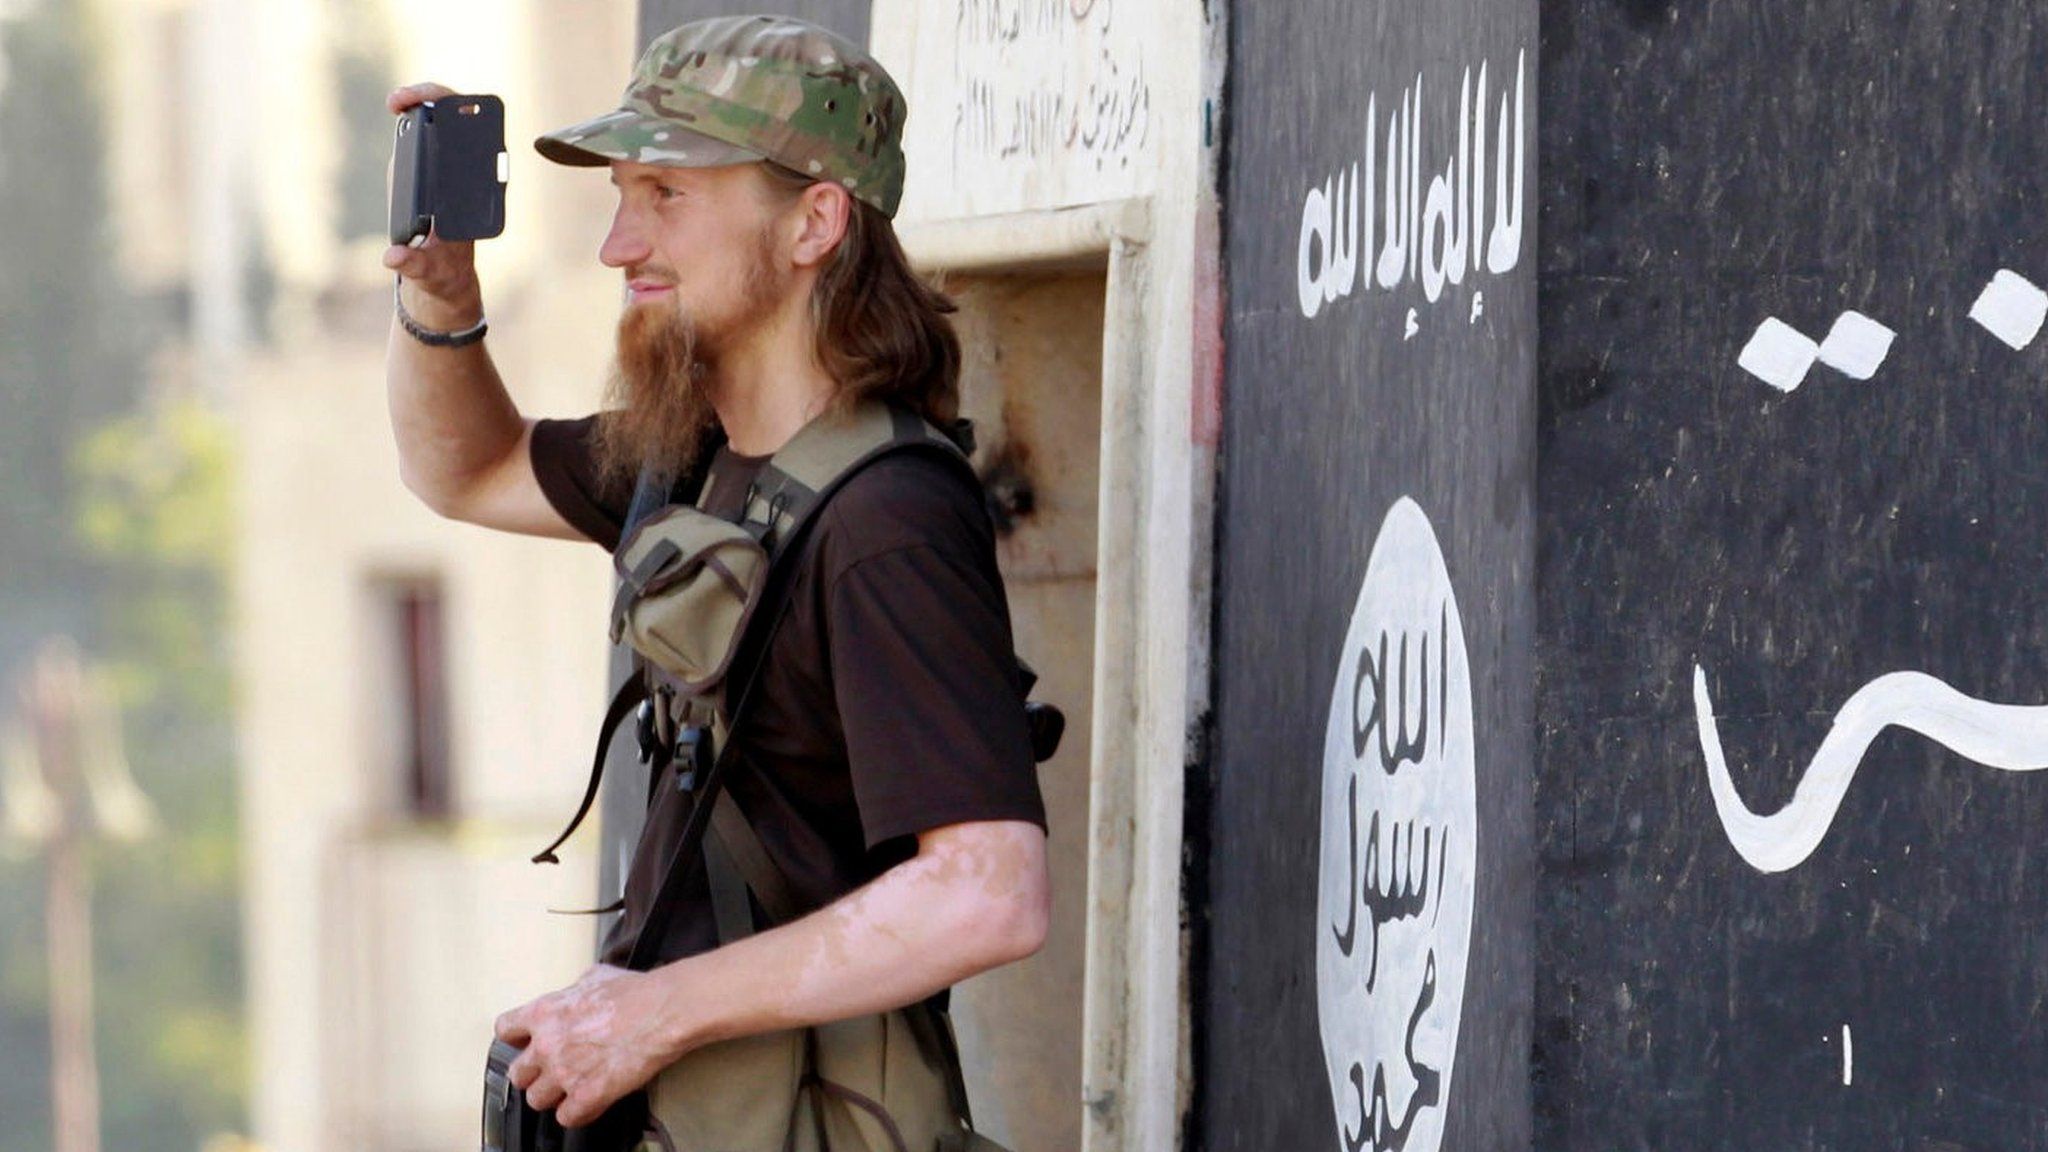 Jihadist takes a photo as IS militants celebrate in Raqqa on 30 June 2014